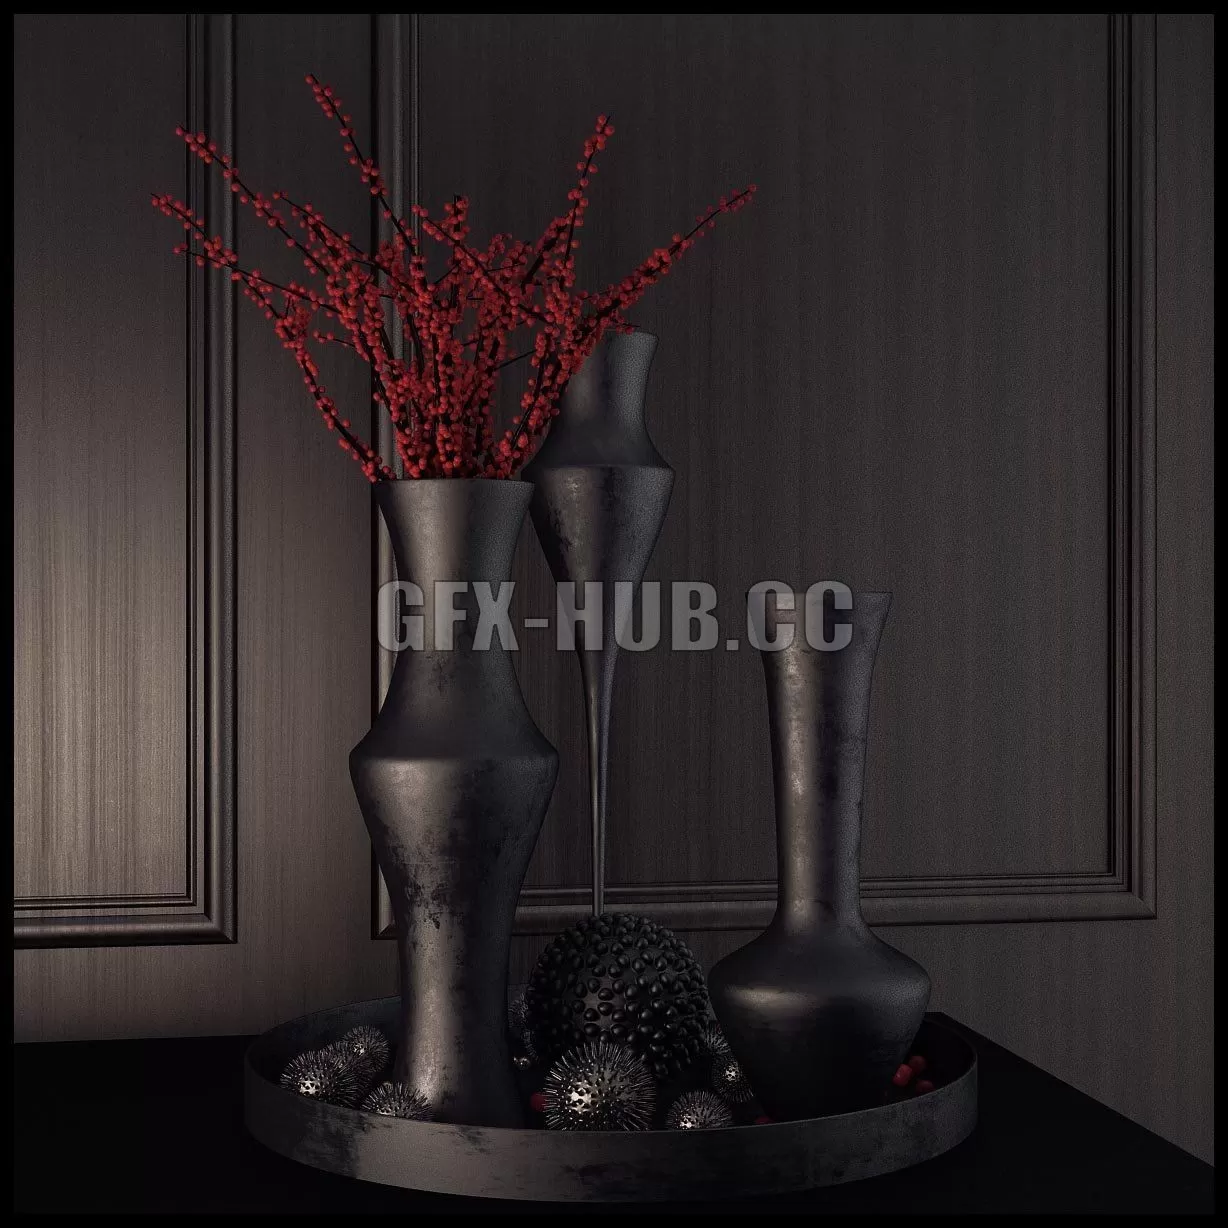 DECORATION – Decorative vase